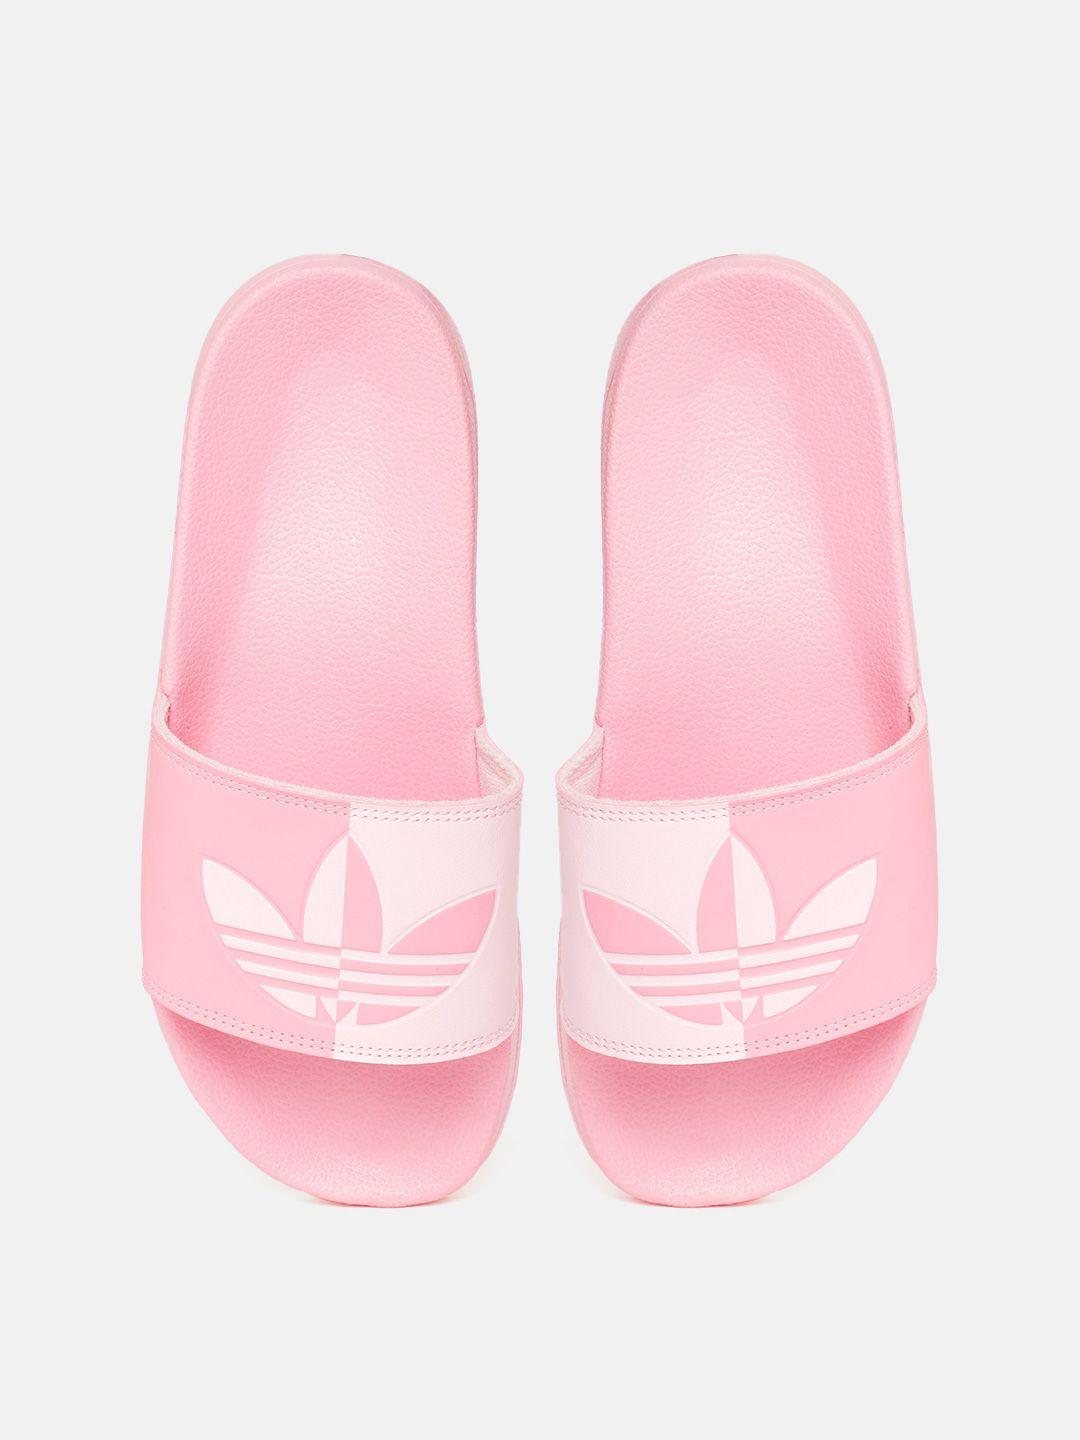 adidas-originals-women-pink-adilette-lite-brand-logo-print-sliders